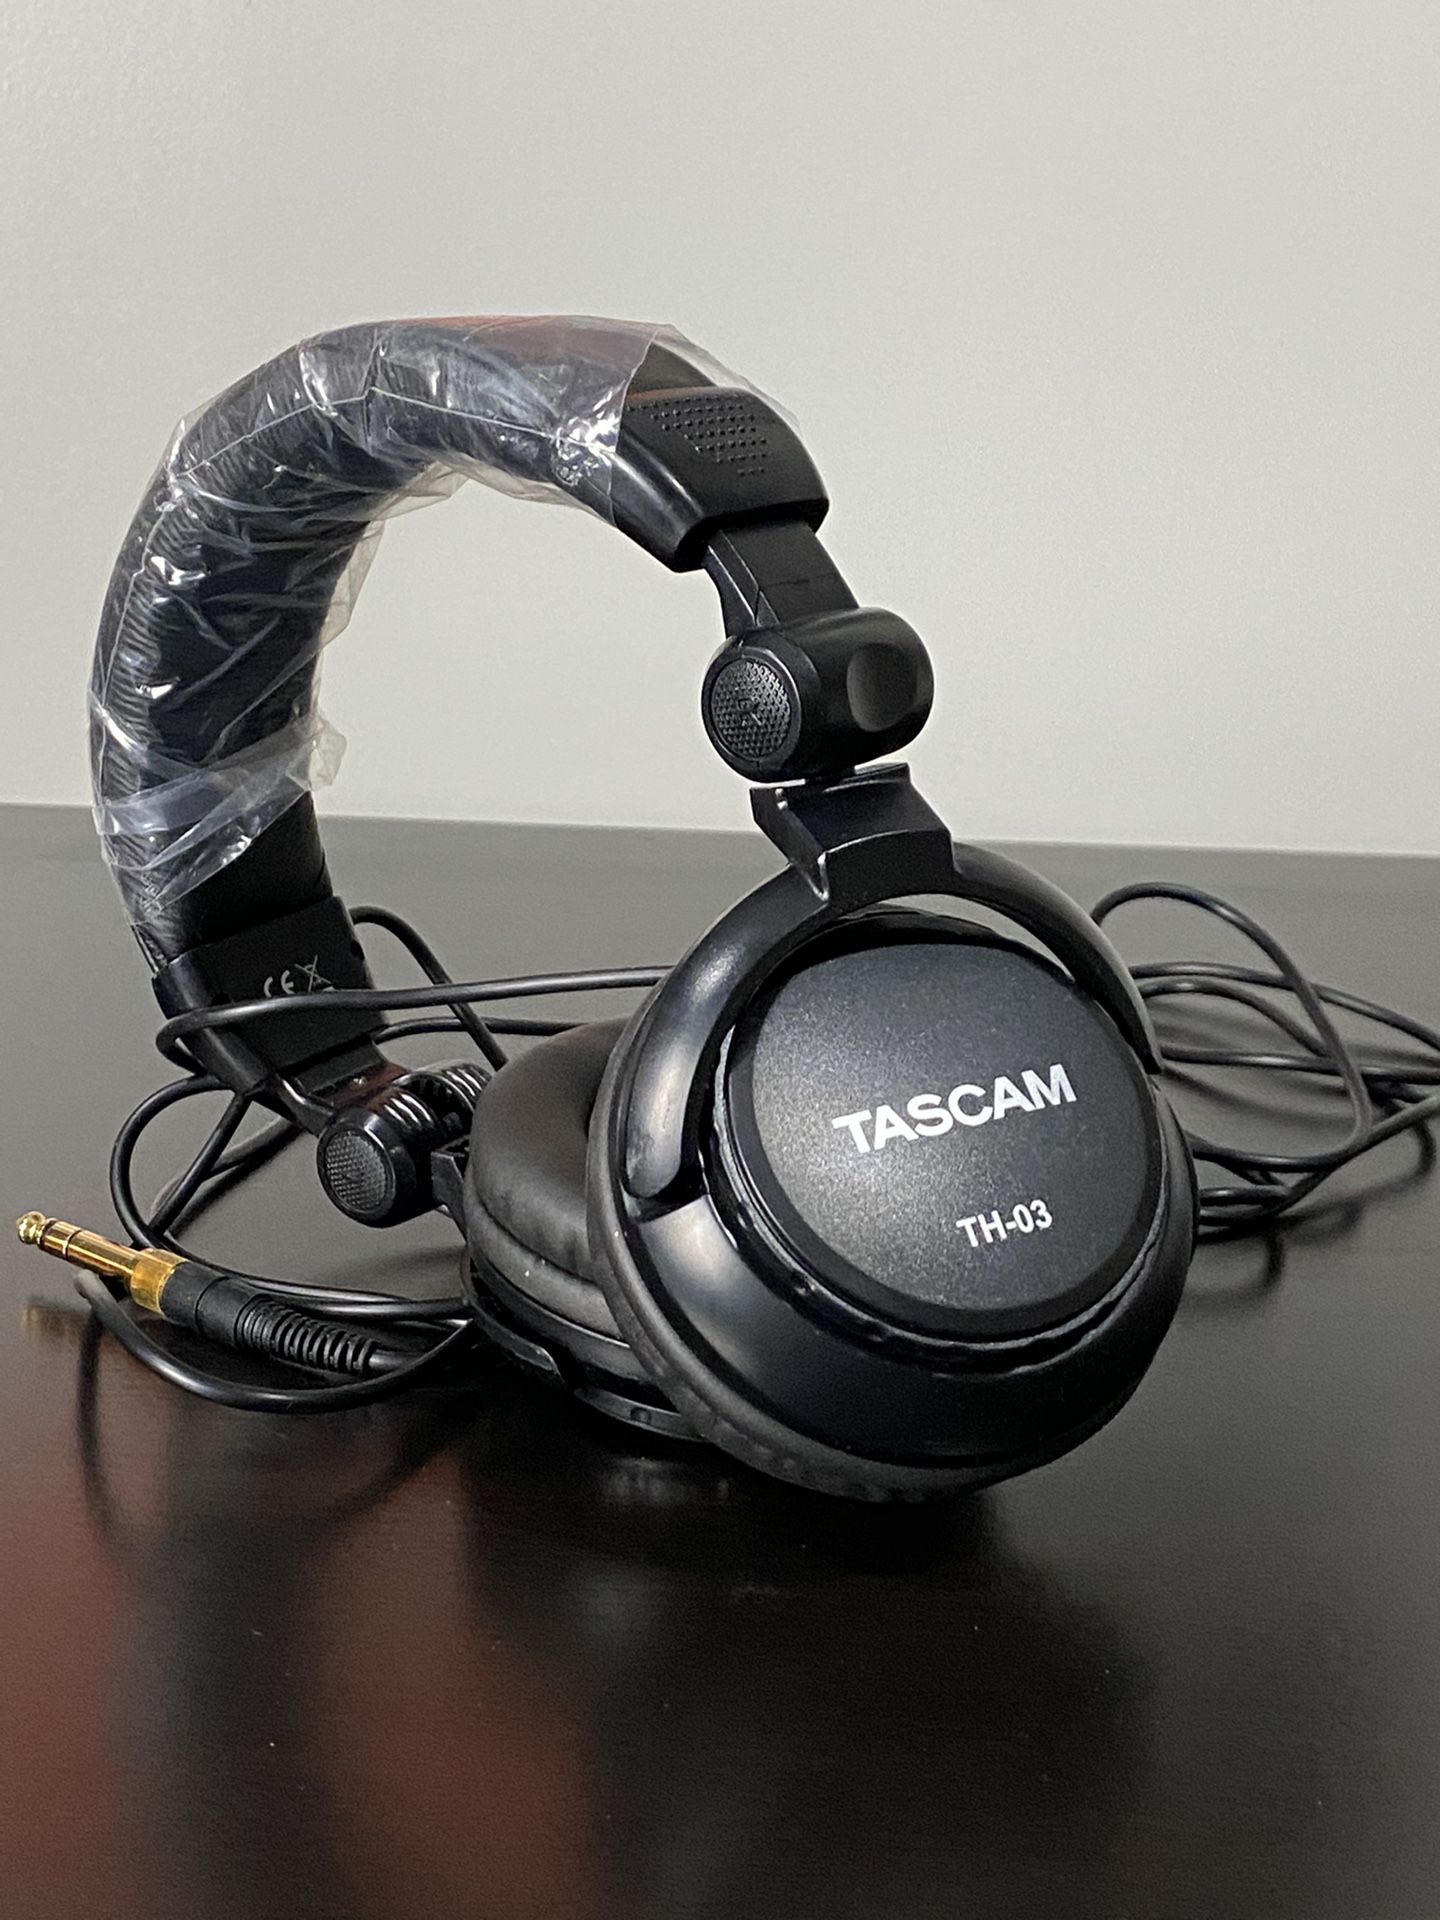 Tascam headphones